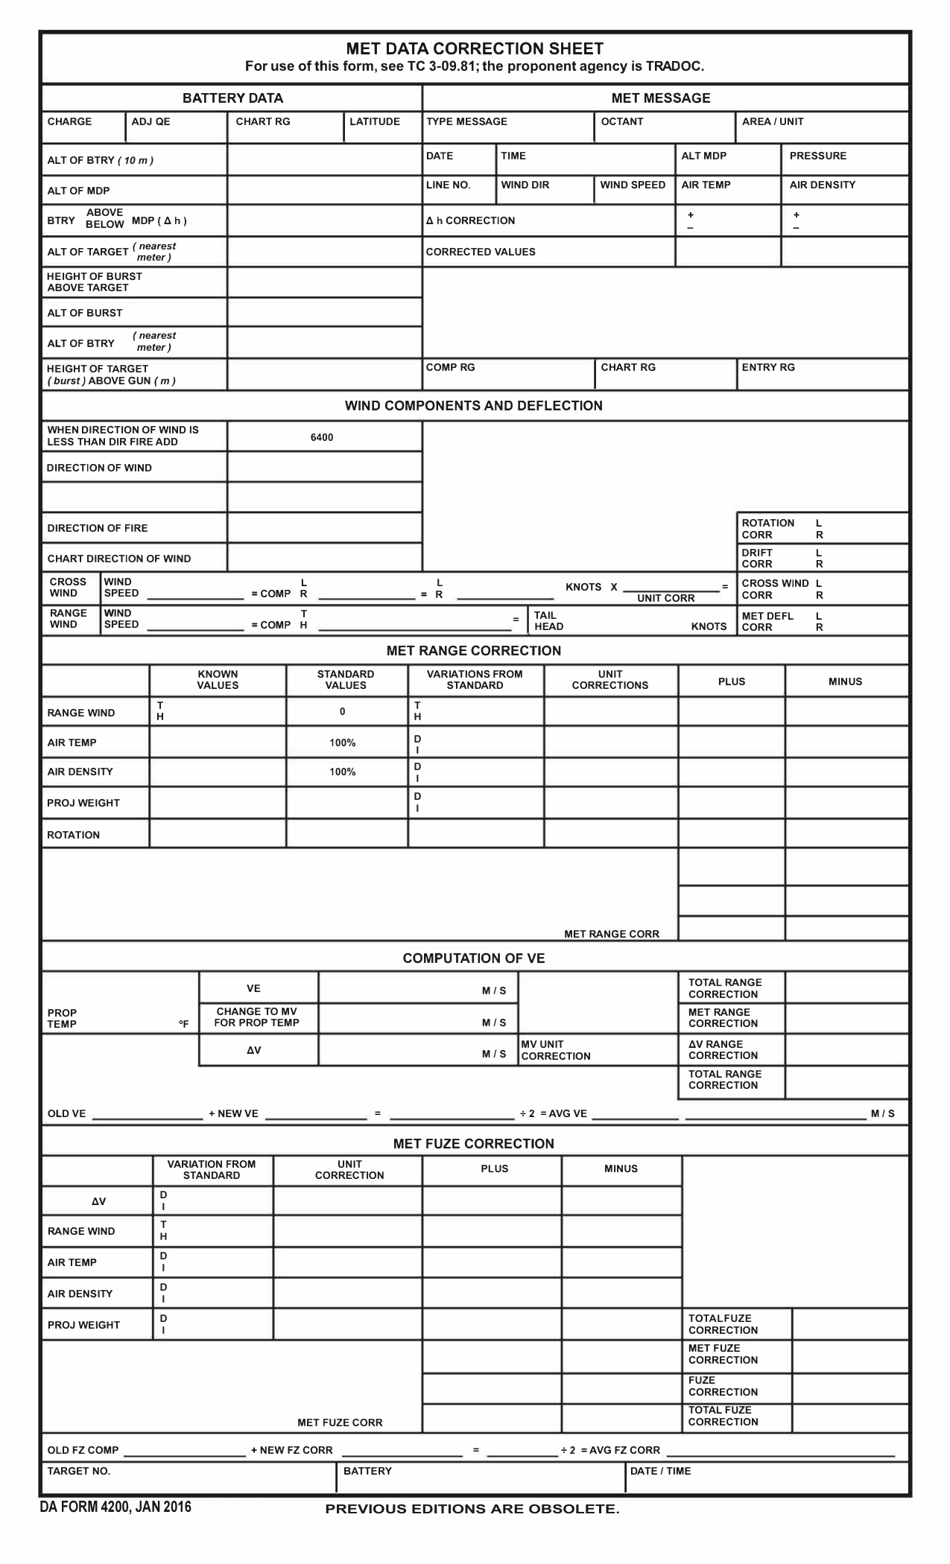 DA Form 4200 Met Data Correction Sheet, Page 1